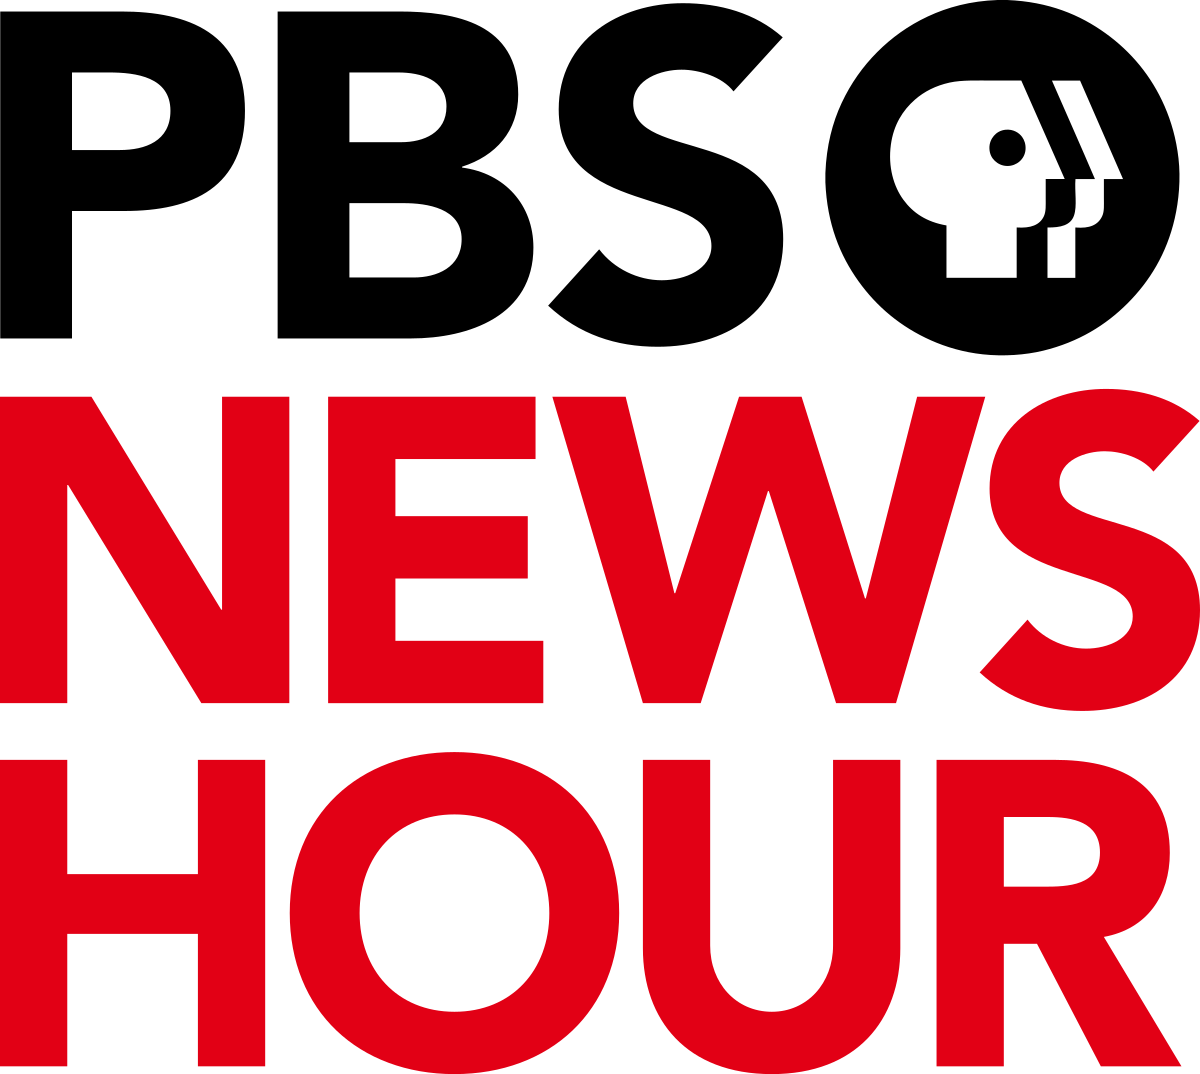 1200px pbs news hour square logo 2020.svg